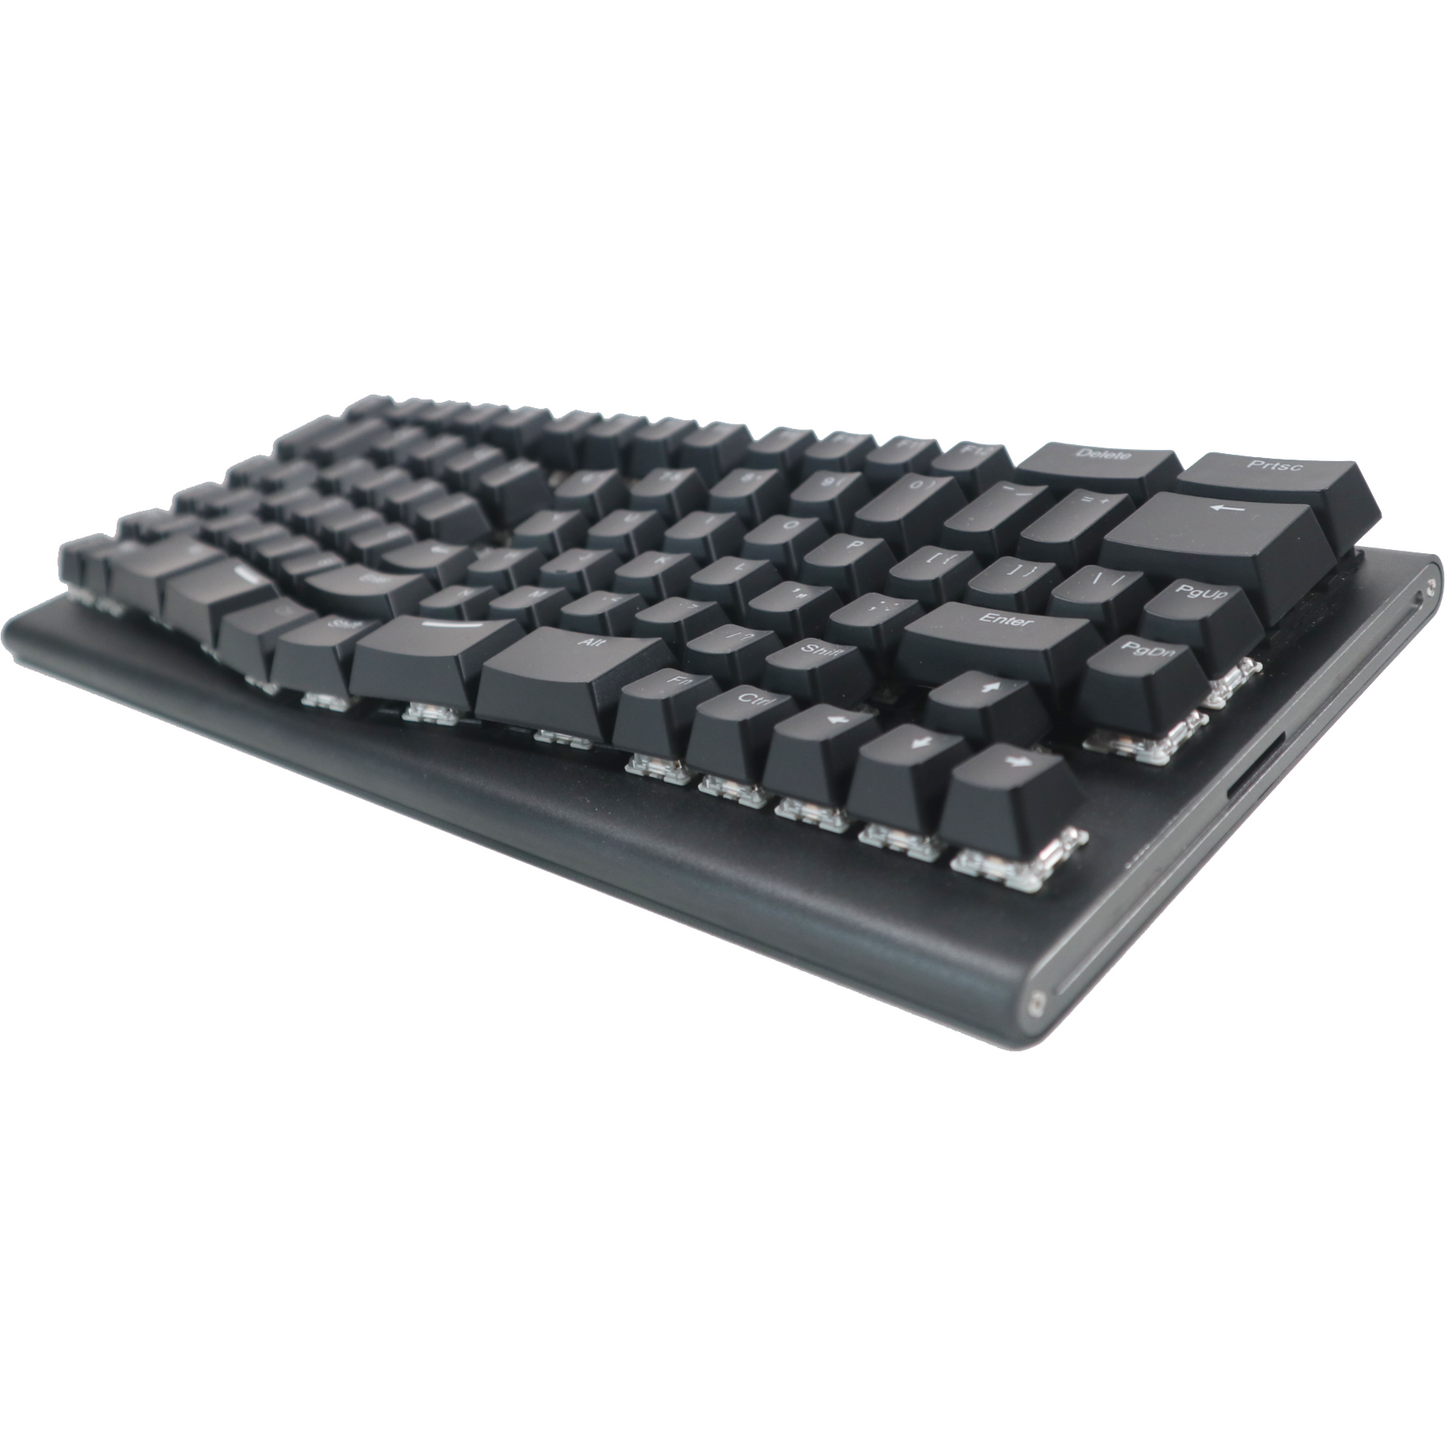 X-Bows Knight Ergonomic Mechanical Keyboard(QMK Firmware) - X-Bows Store